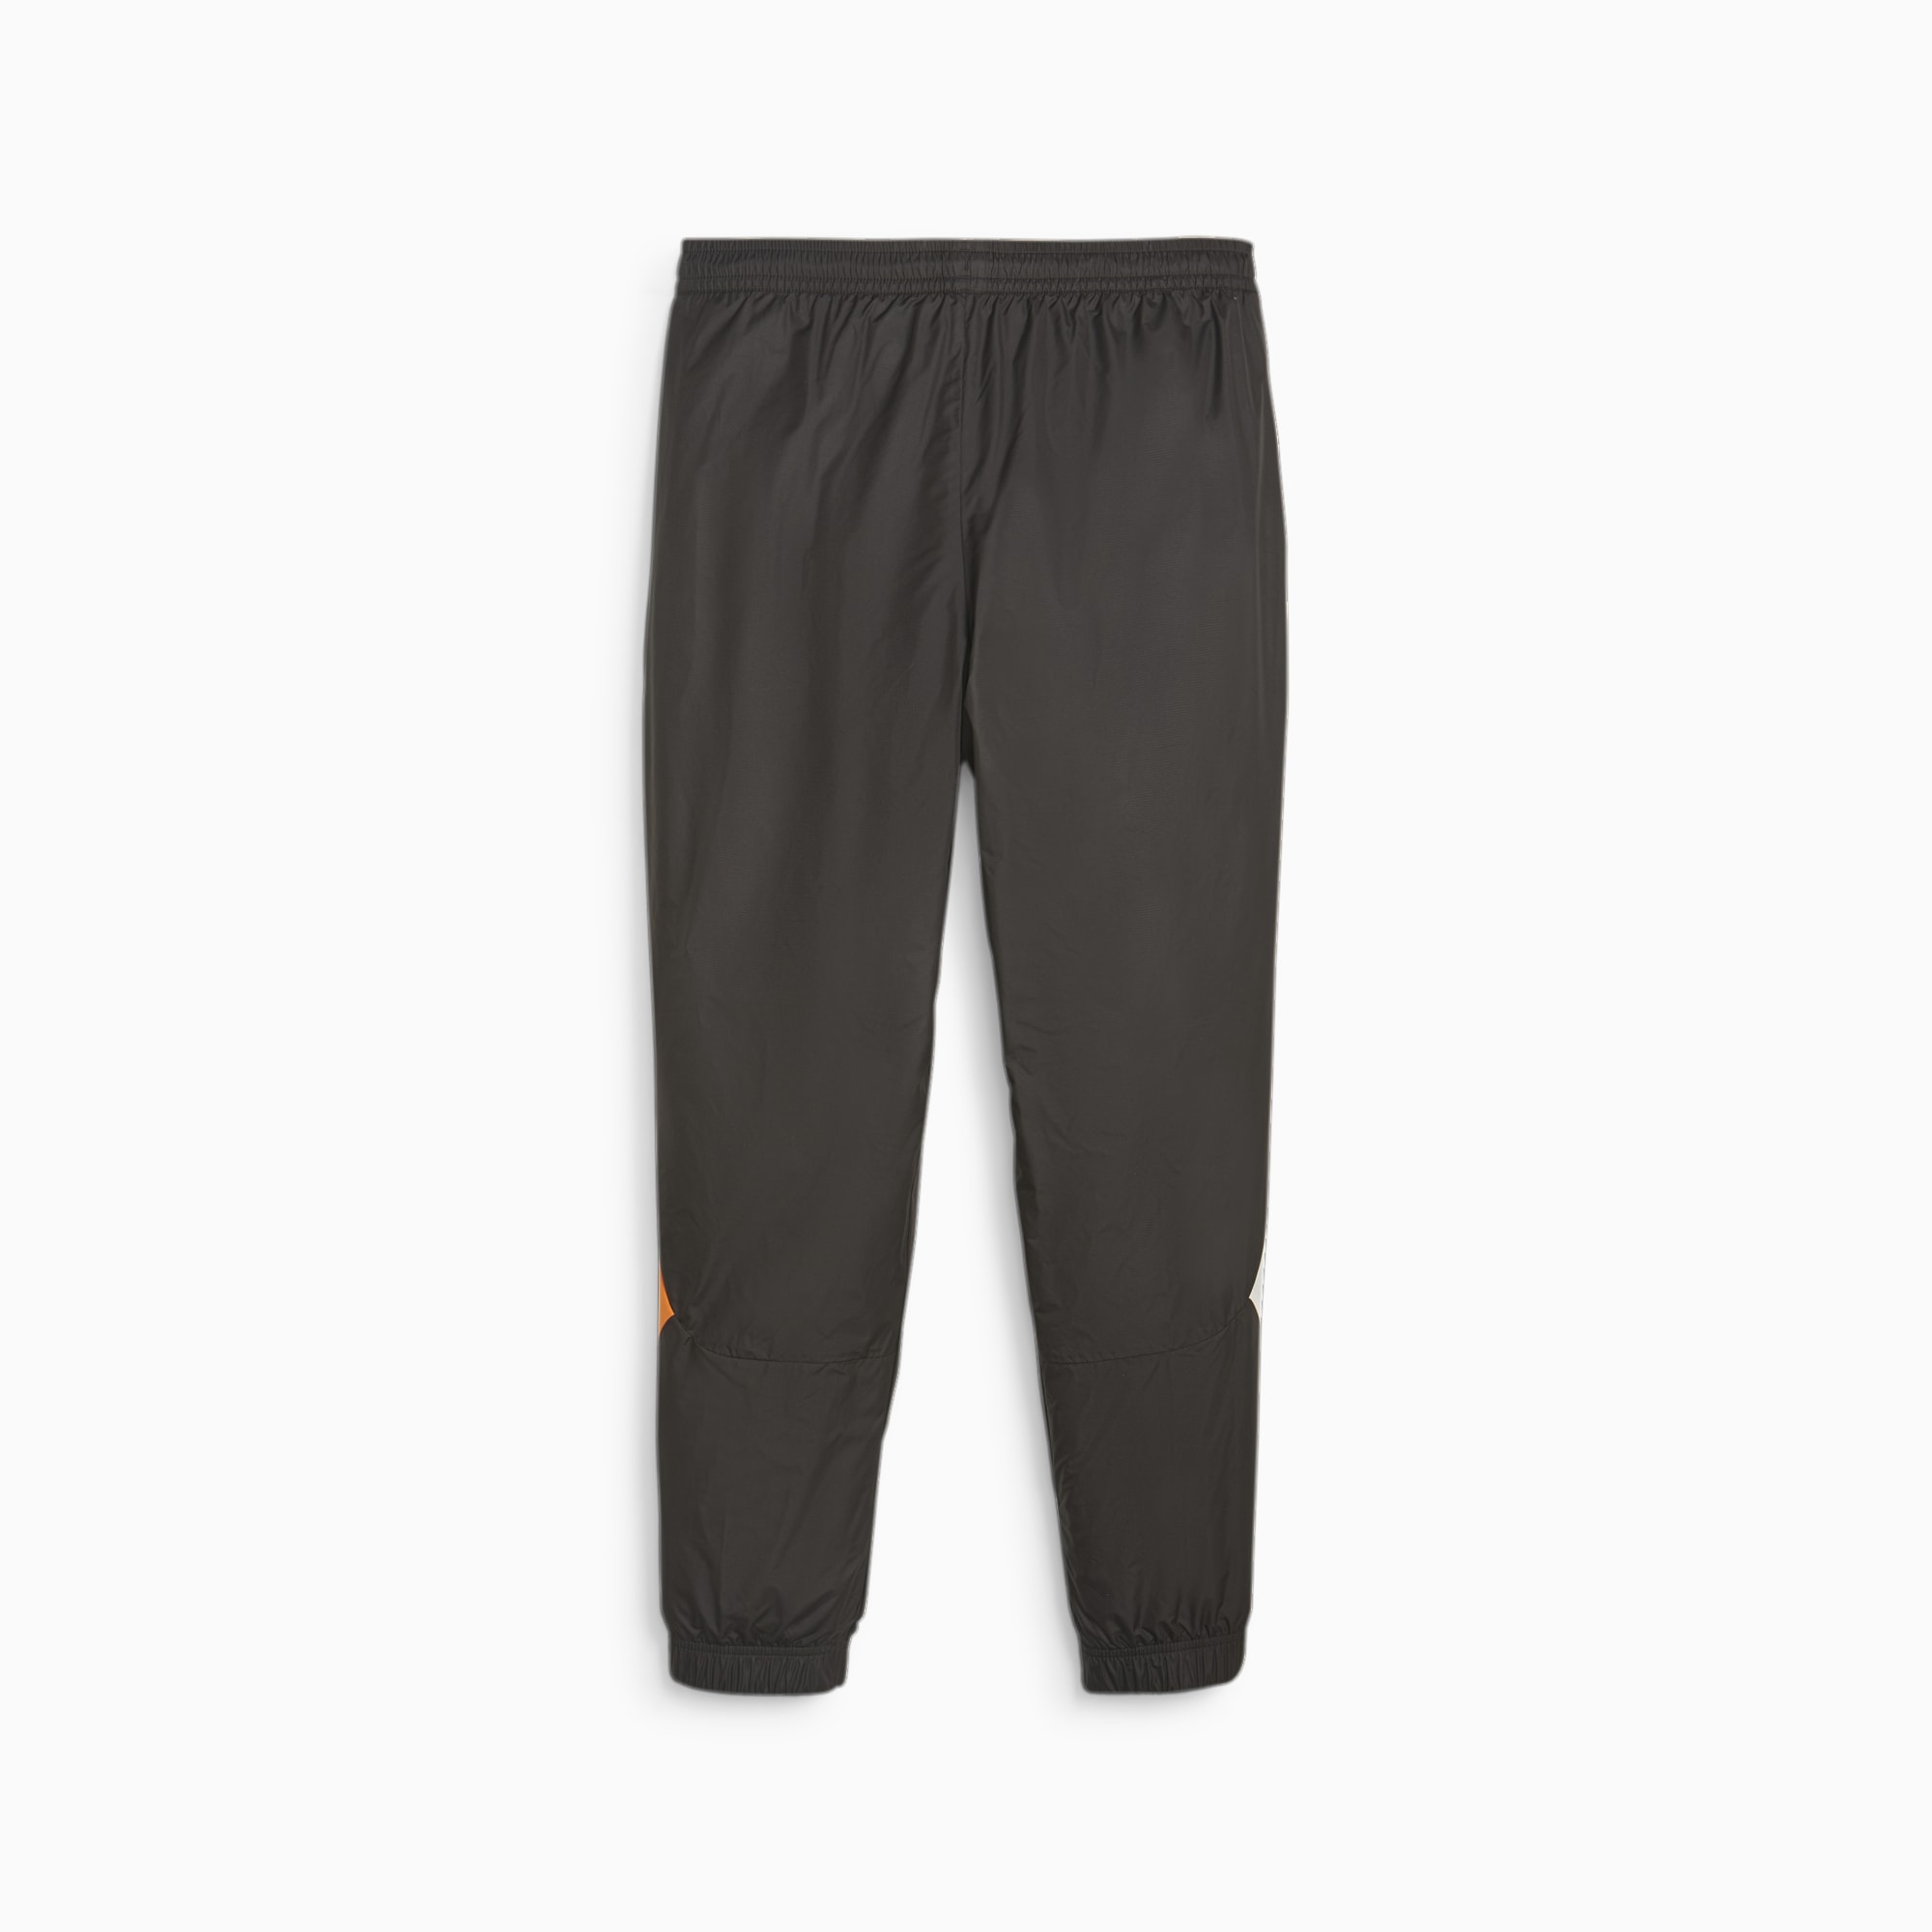 Men's PUMA Olympique De Marseille Prematch Football Pants, Black/Flat Dark Grey, Size S, Clothing